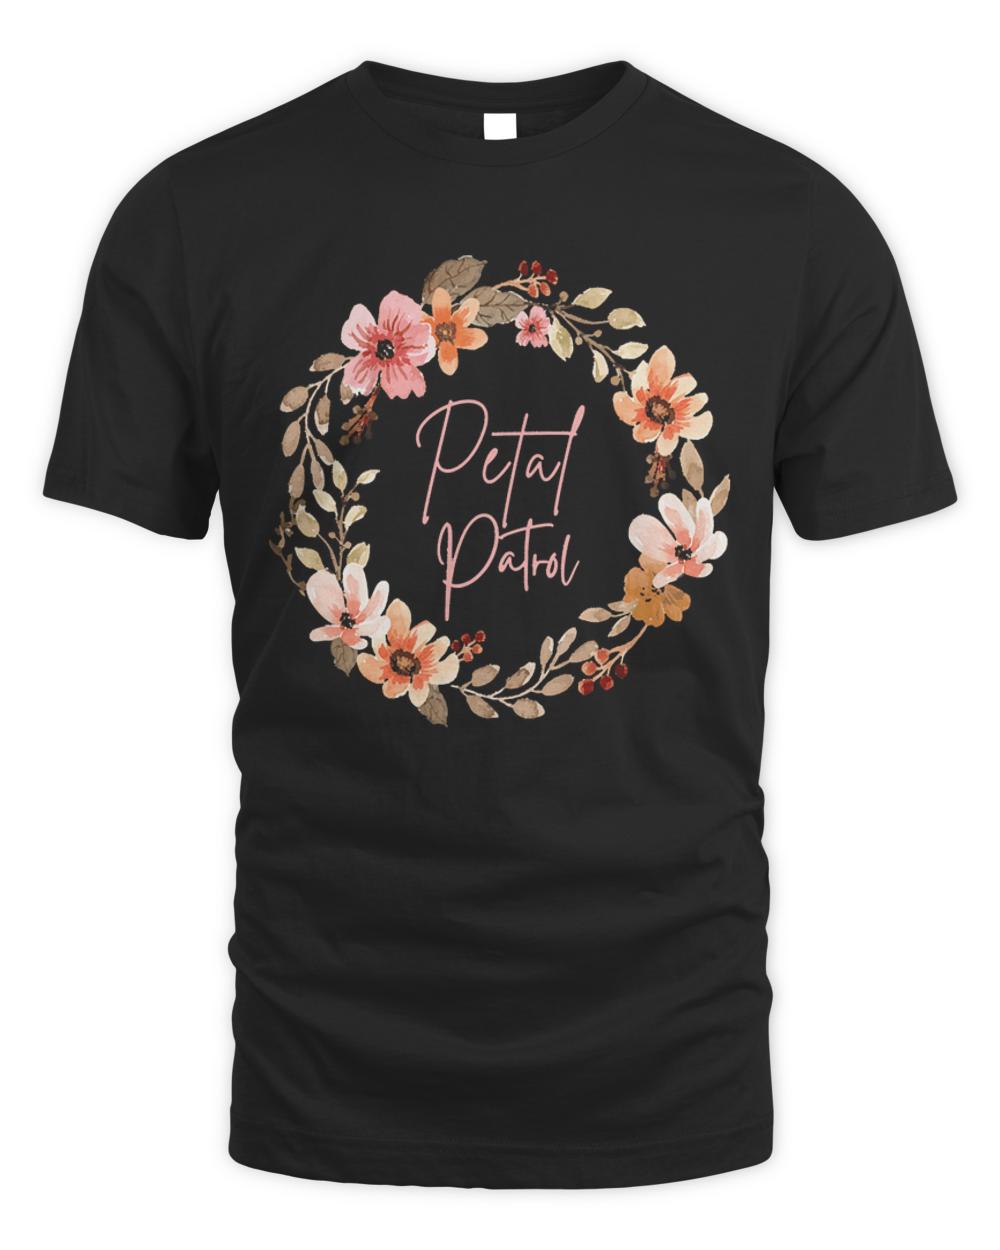 Petal Patrol T- Shirt Petal Patrol Flower Girl T- Shirt